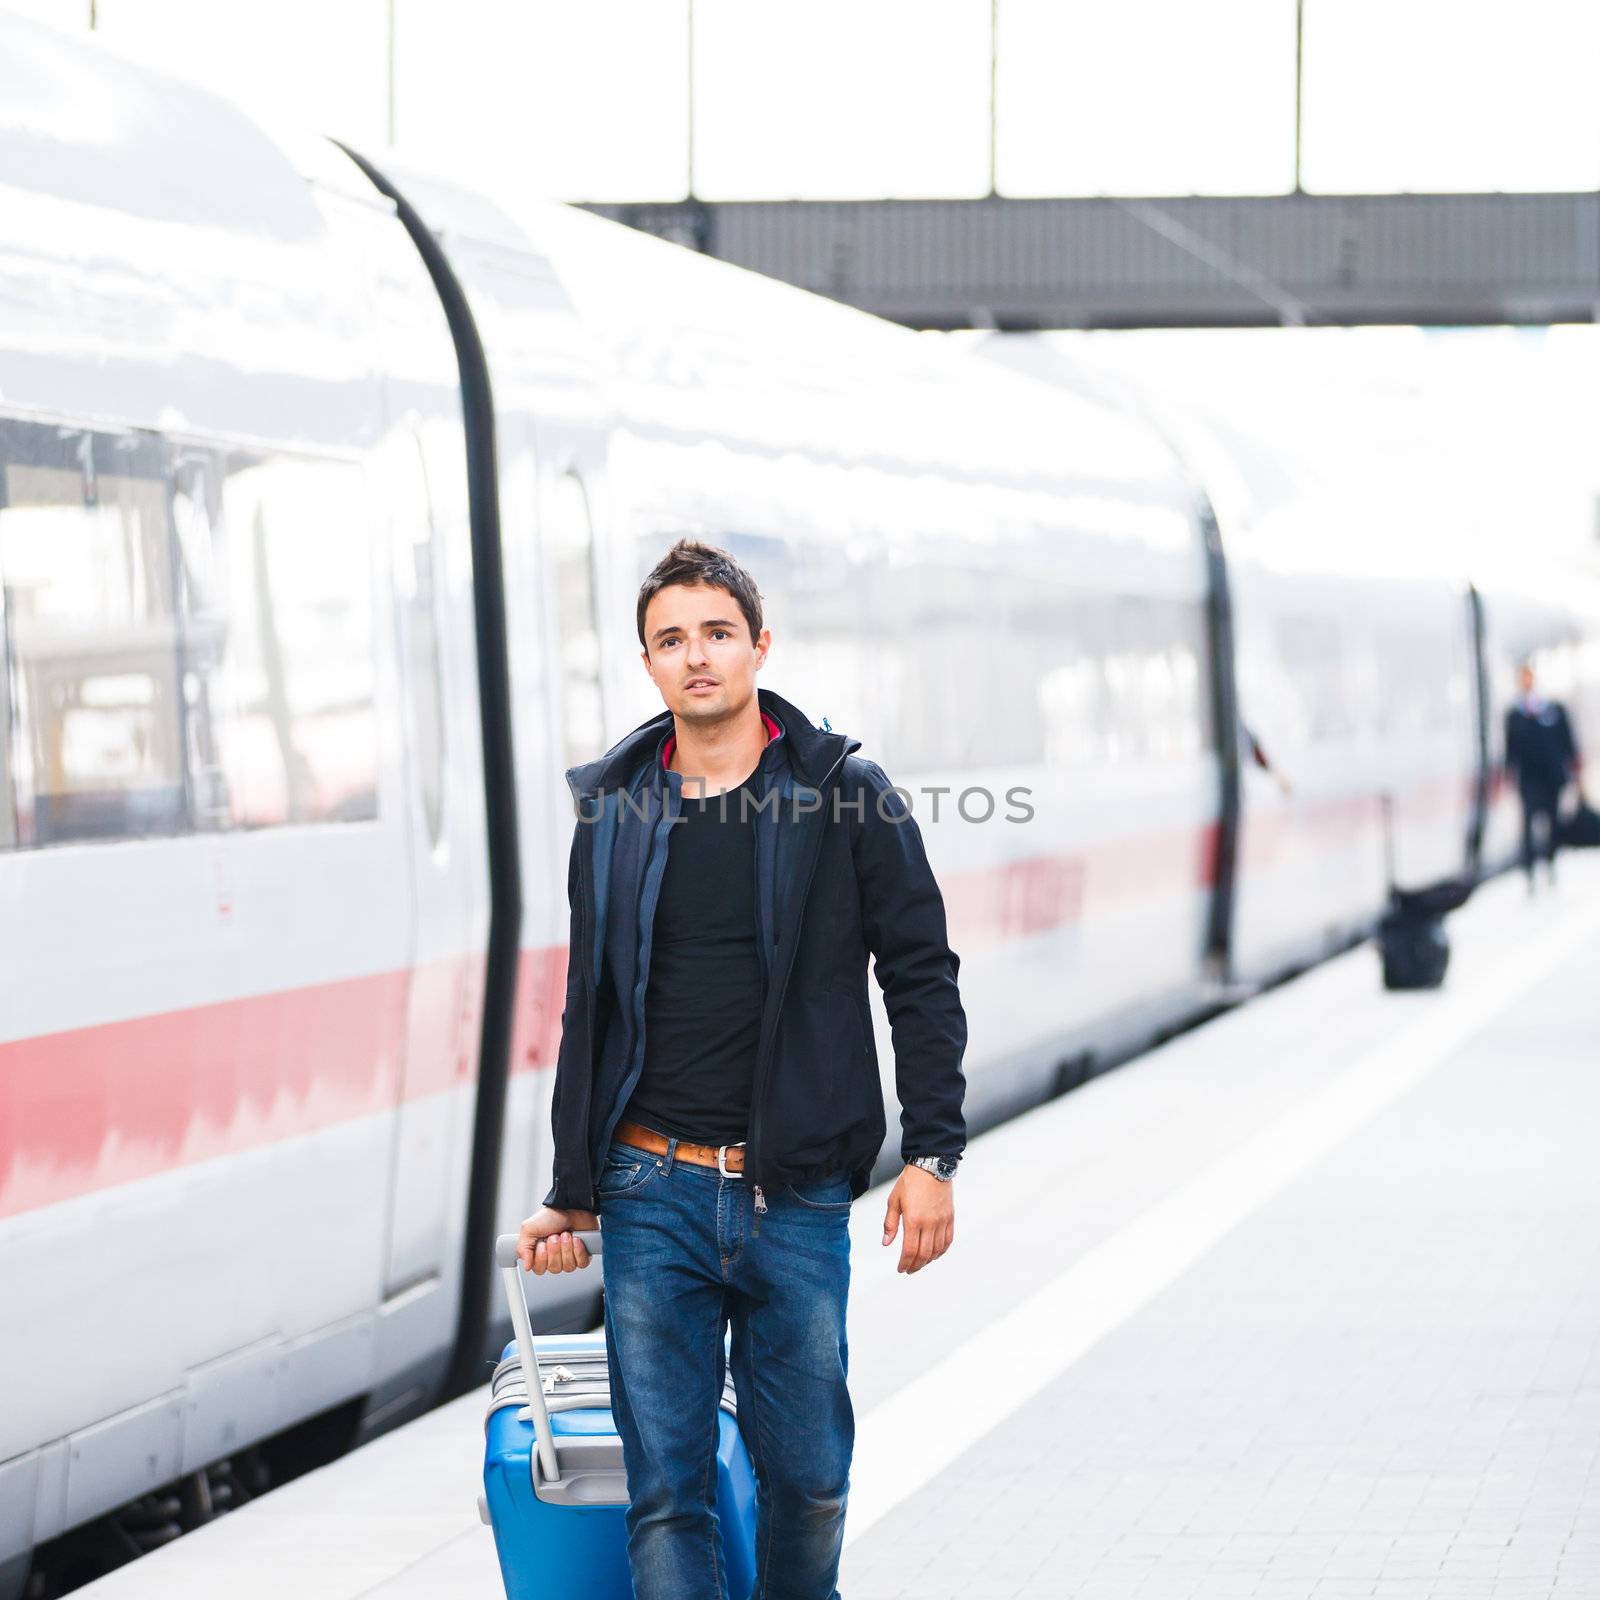 Just arrived: handsome young man walking along a platform at a modern train station